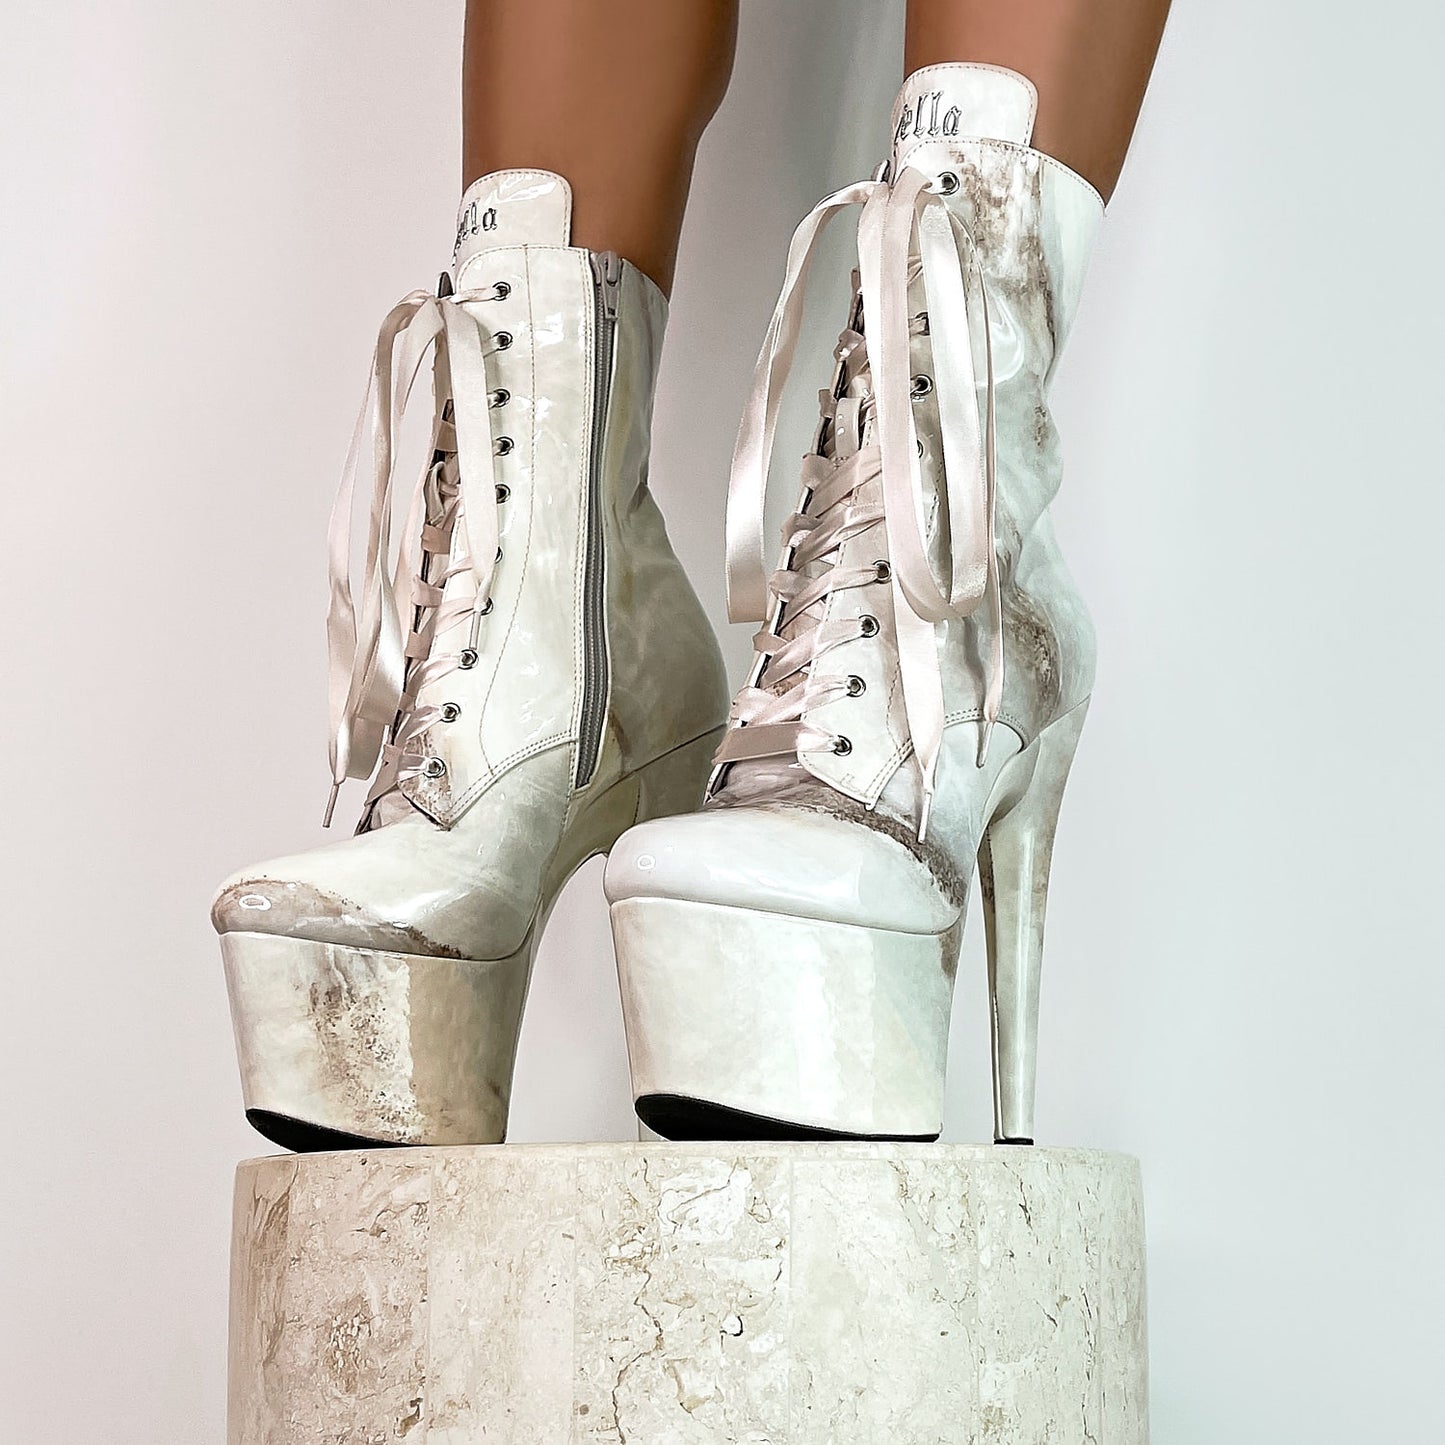 Hope Boot - 7 INCH, stripper shoe, stripper heel, pole heel, not a pleaser, platform, dancer, pole dance, floor work